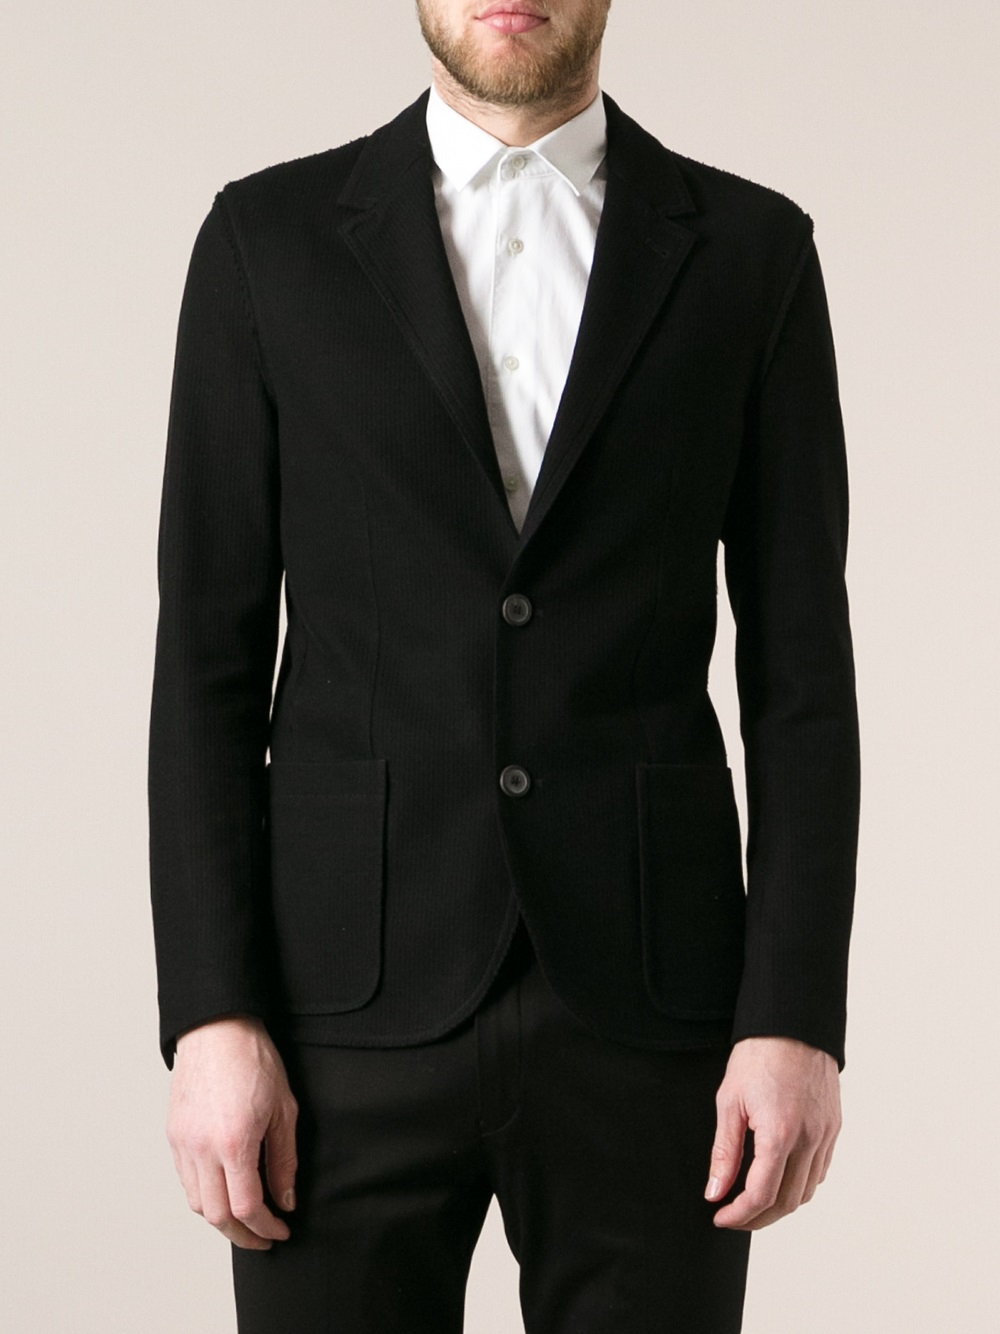 Lyst - Lanvin Deconstructed Blazer in Black for Men